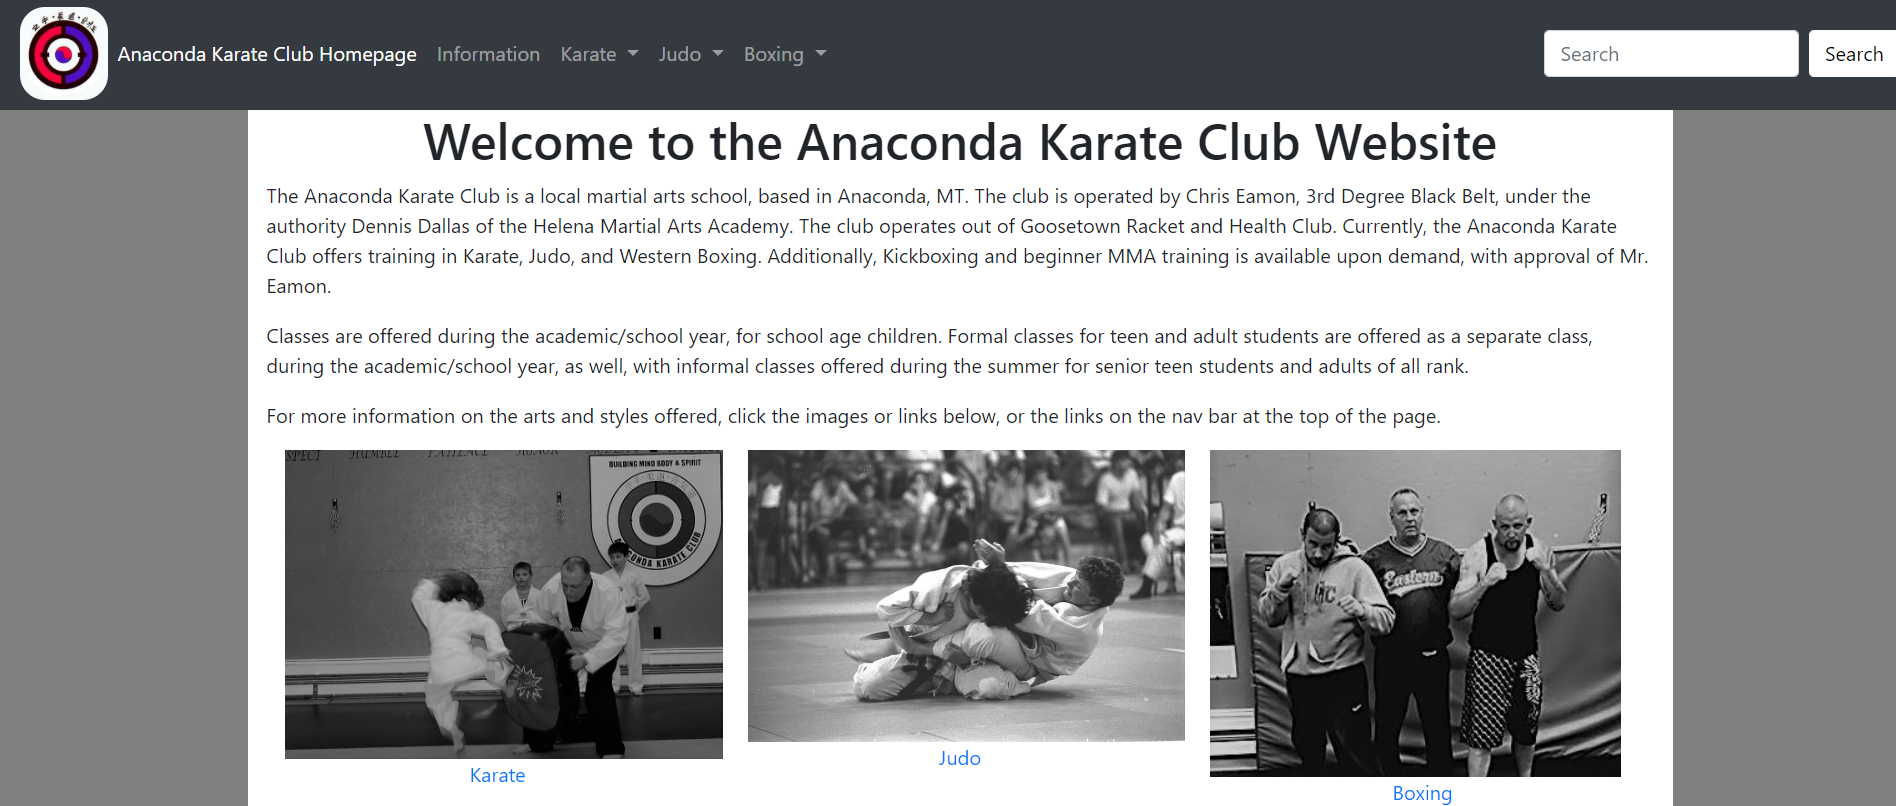 Image of the Anaconda Karate Club website